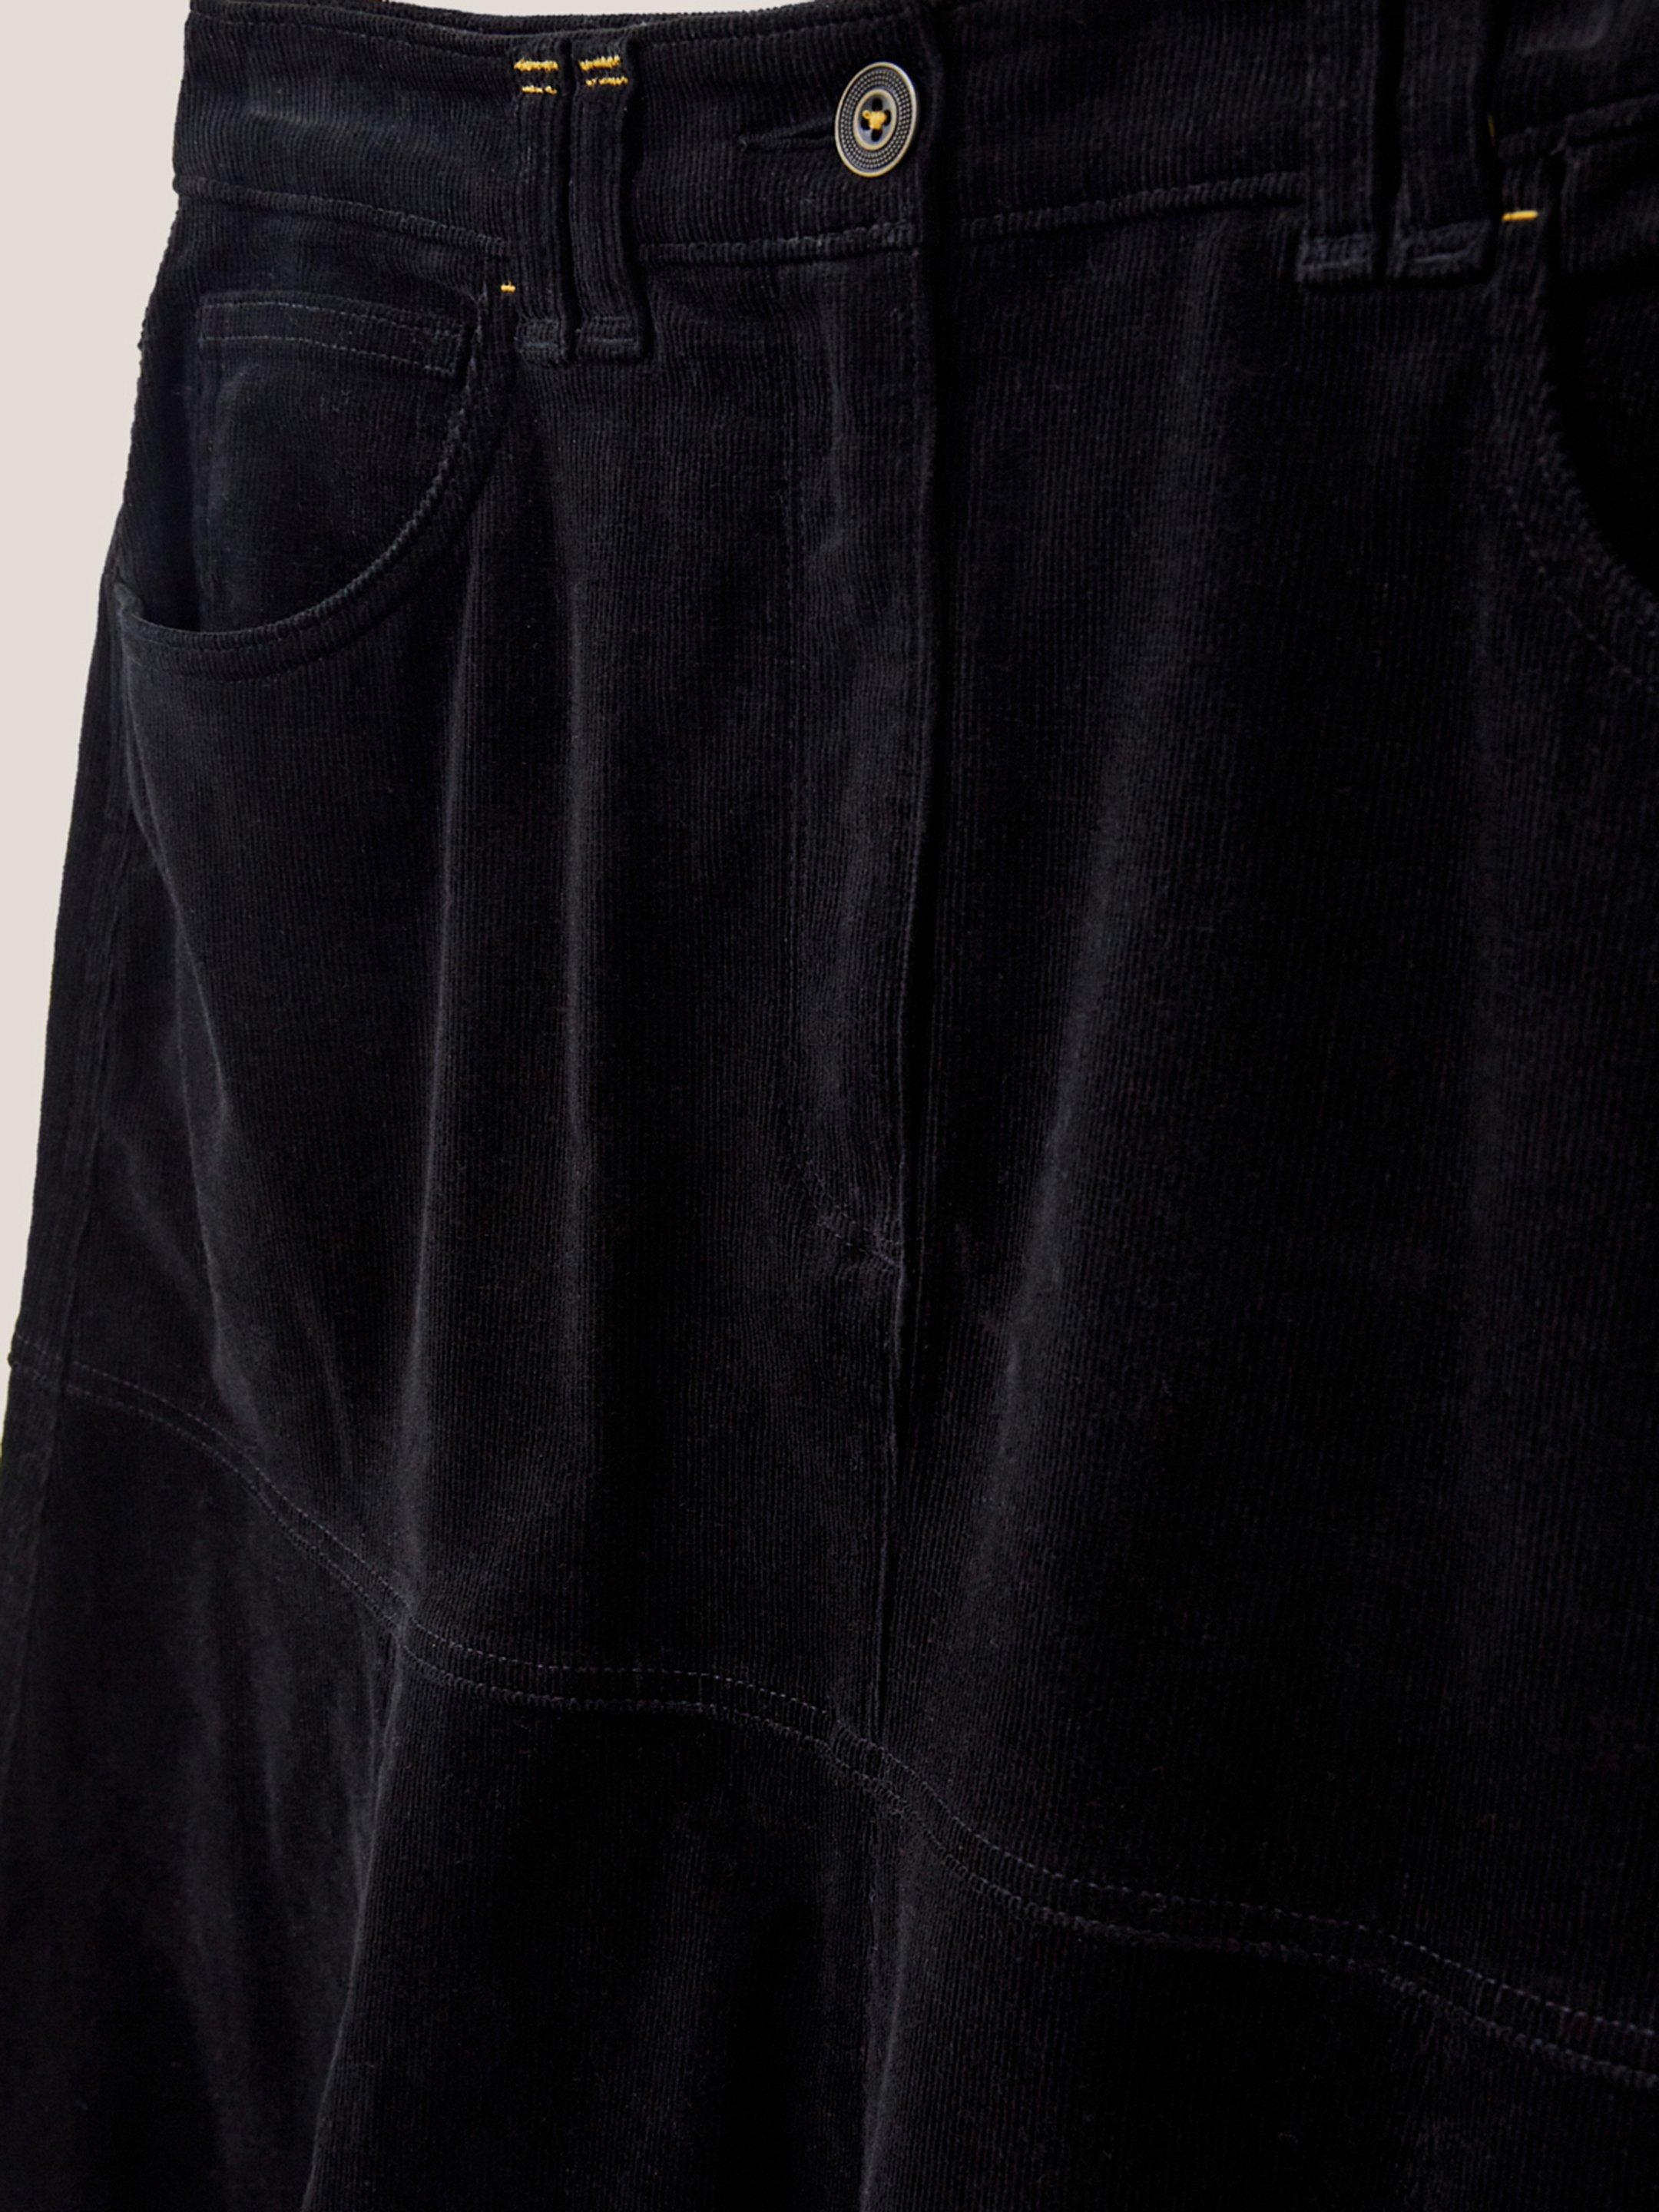 Quinn Organic Cord Skirt in PURE BLK - FLAT DETAIL